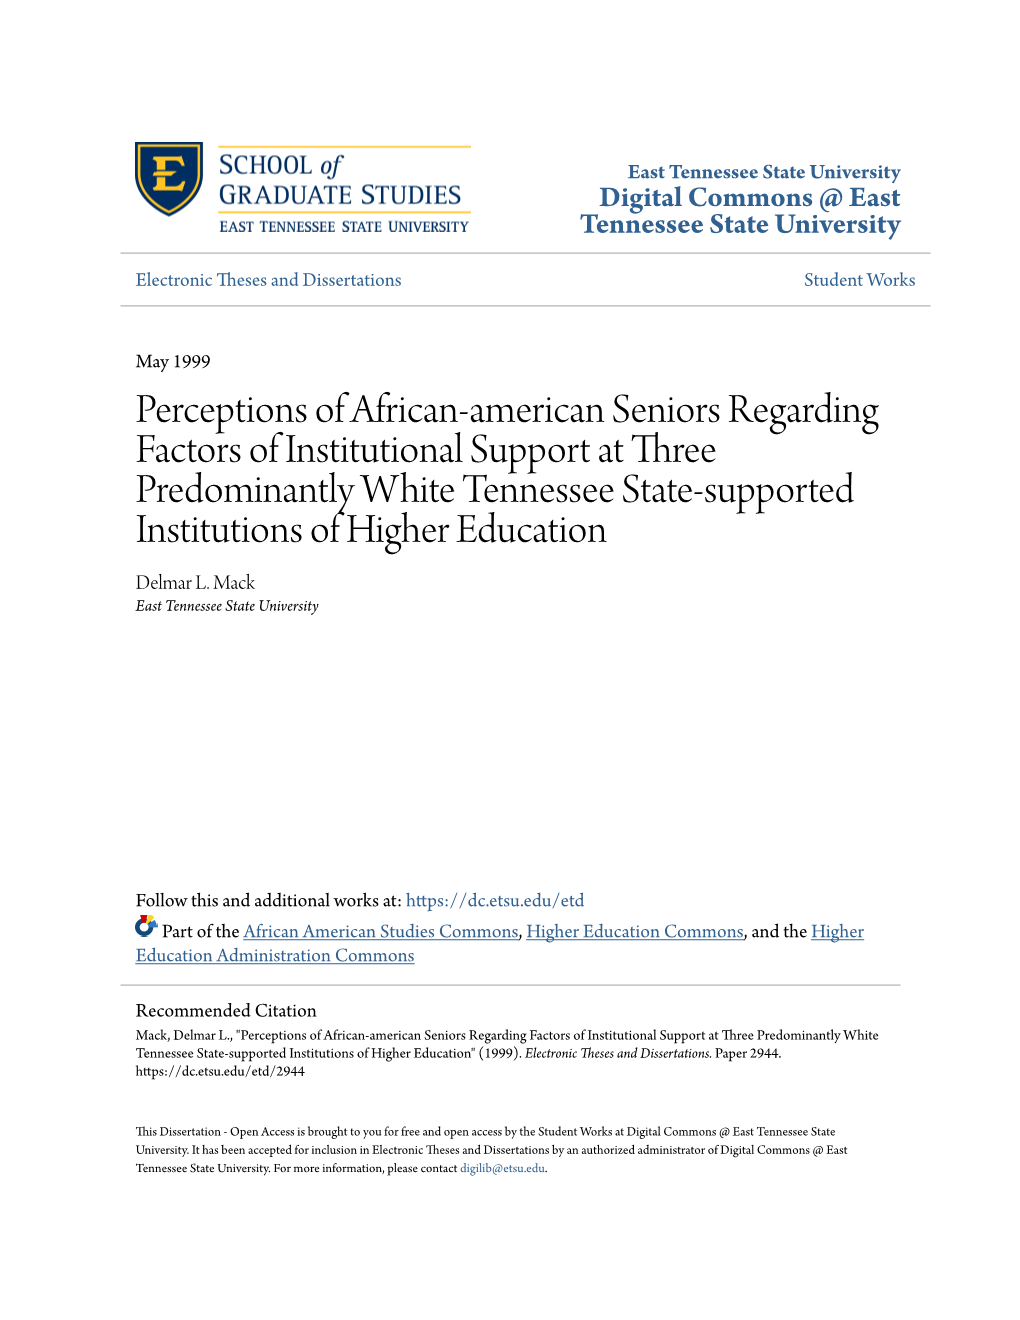 Perceptions of African-American Seniors Regarding Factors Of